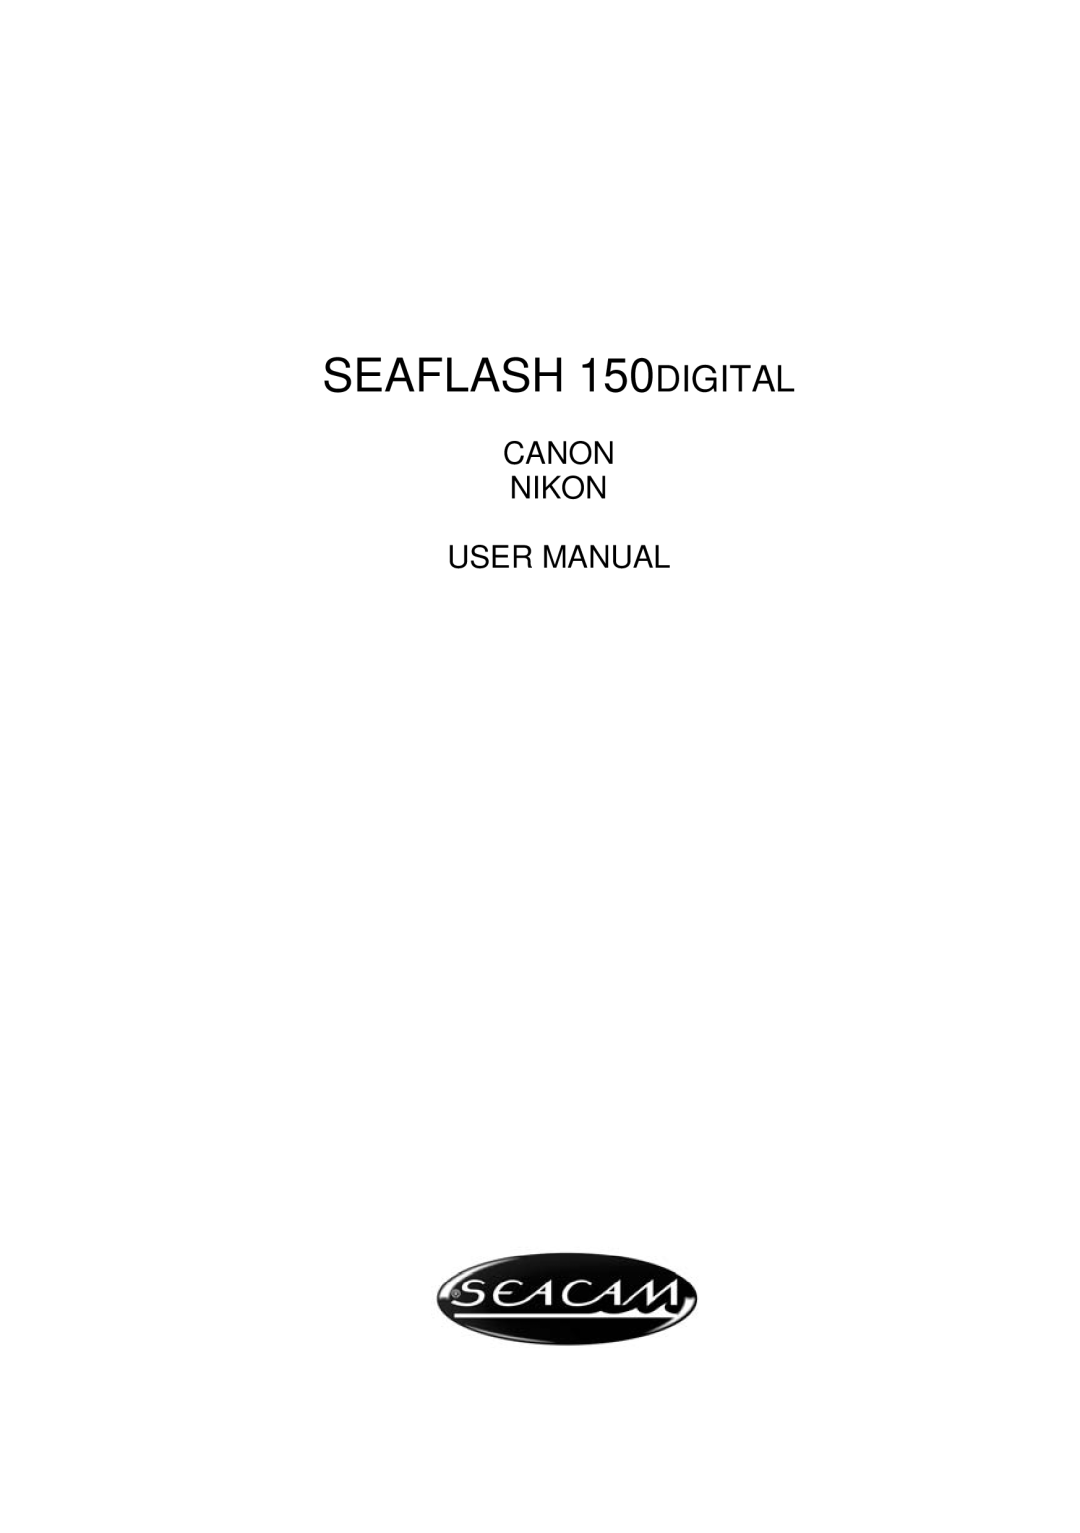 Canon user manual Seaflash 150DIGITAL 